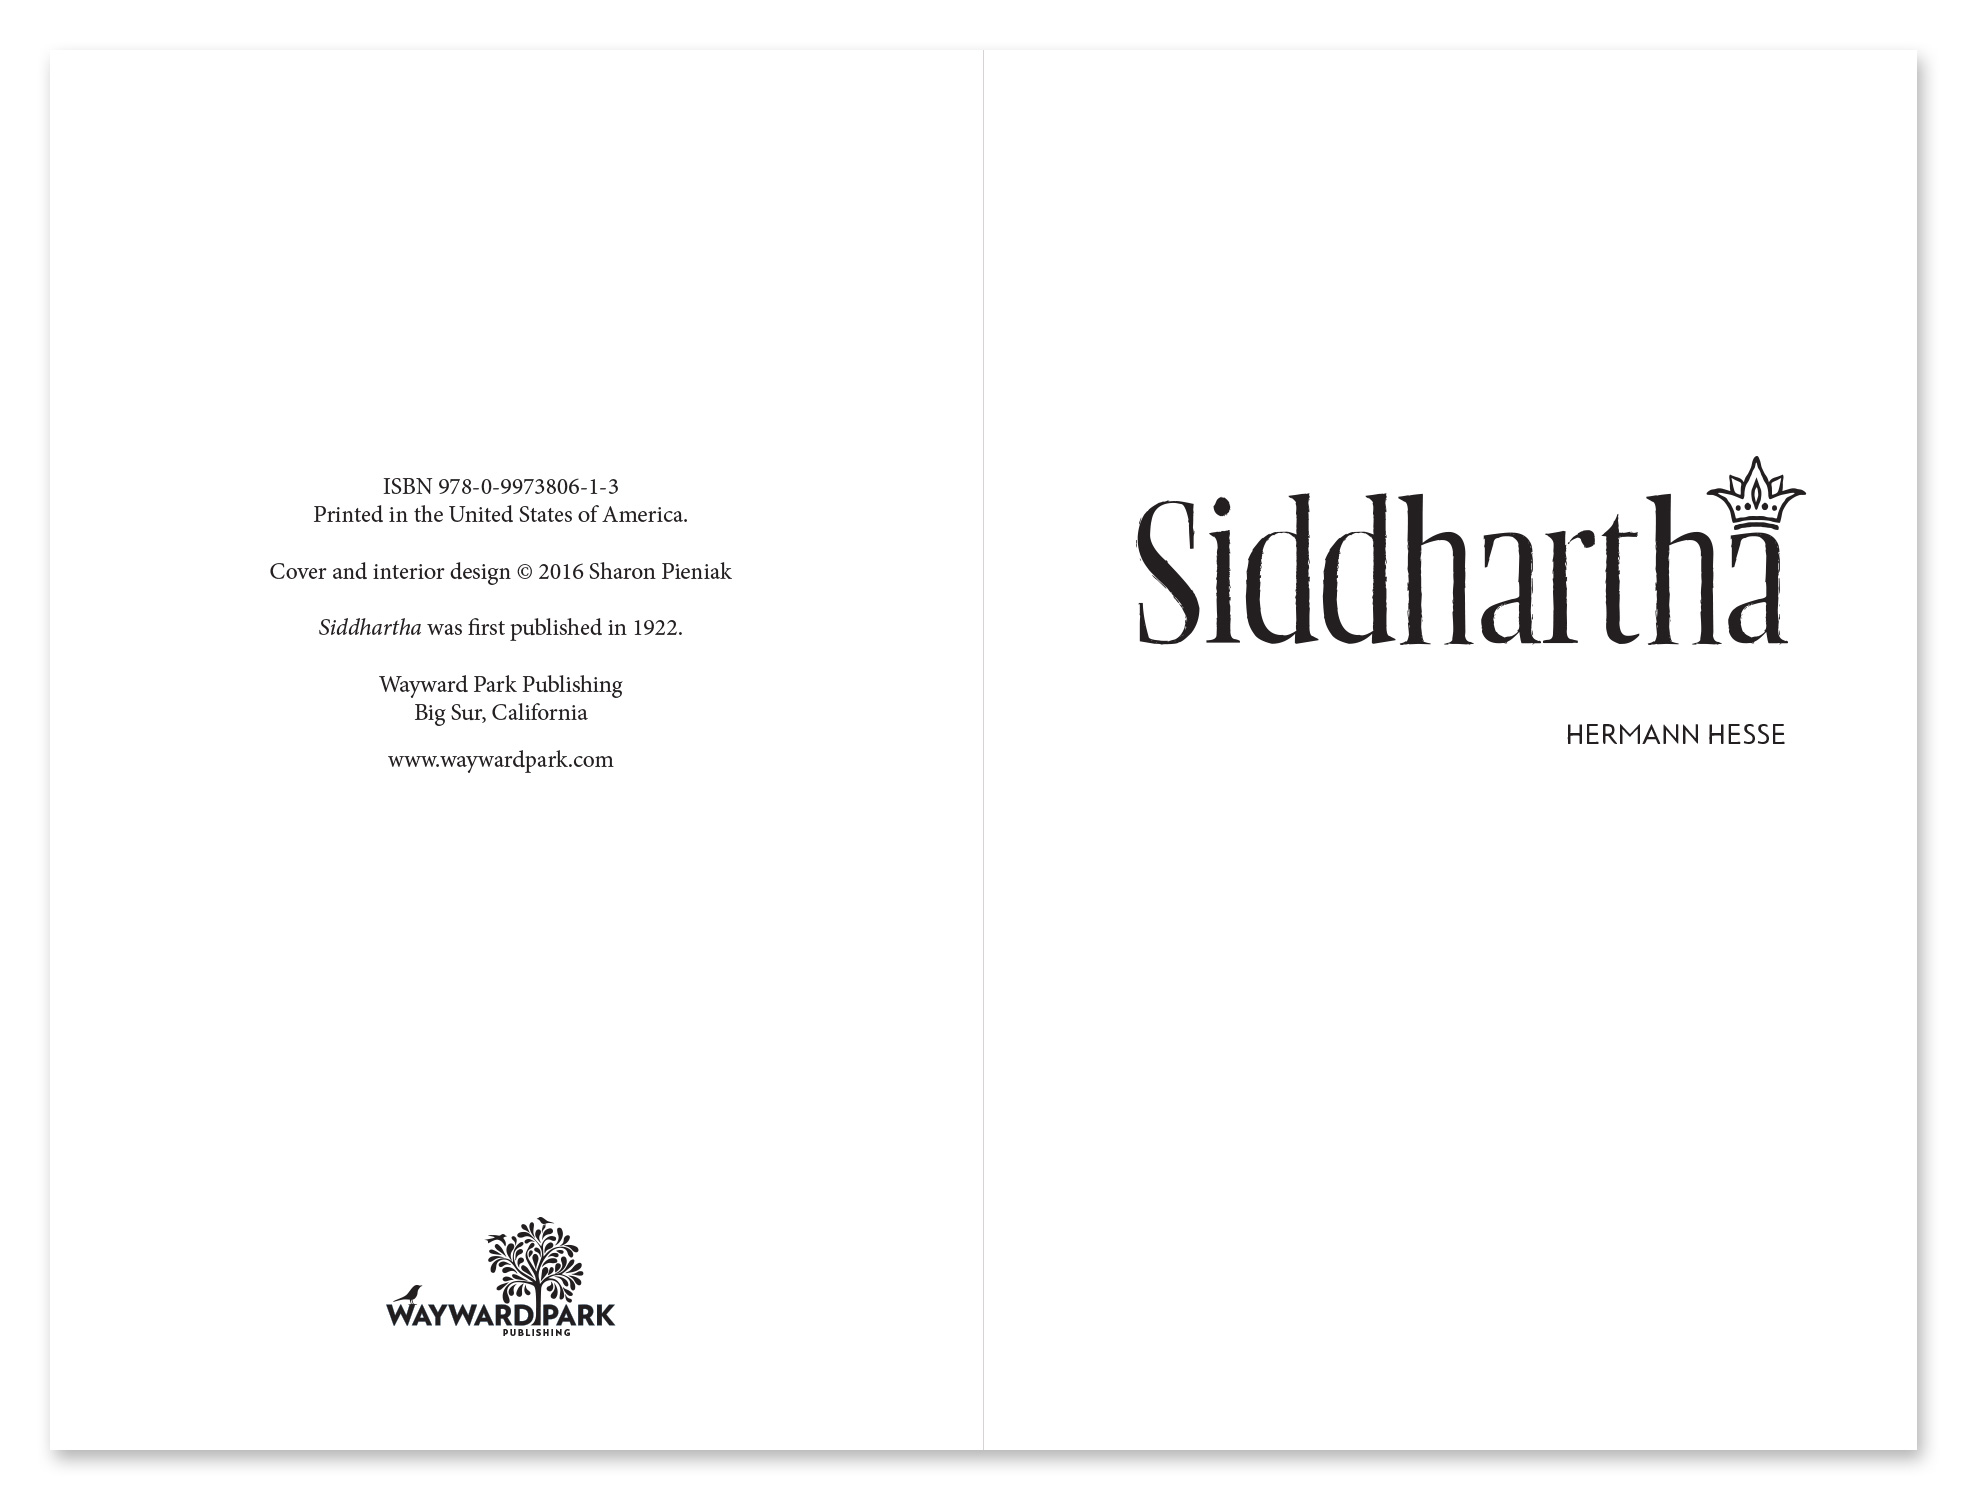 Siddhartha-2b.jpg